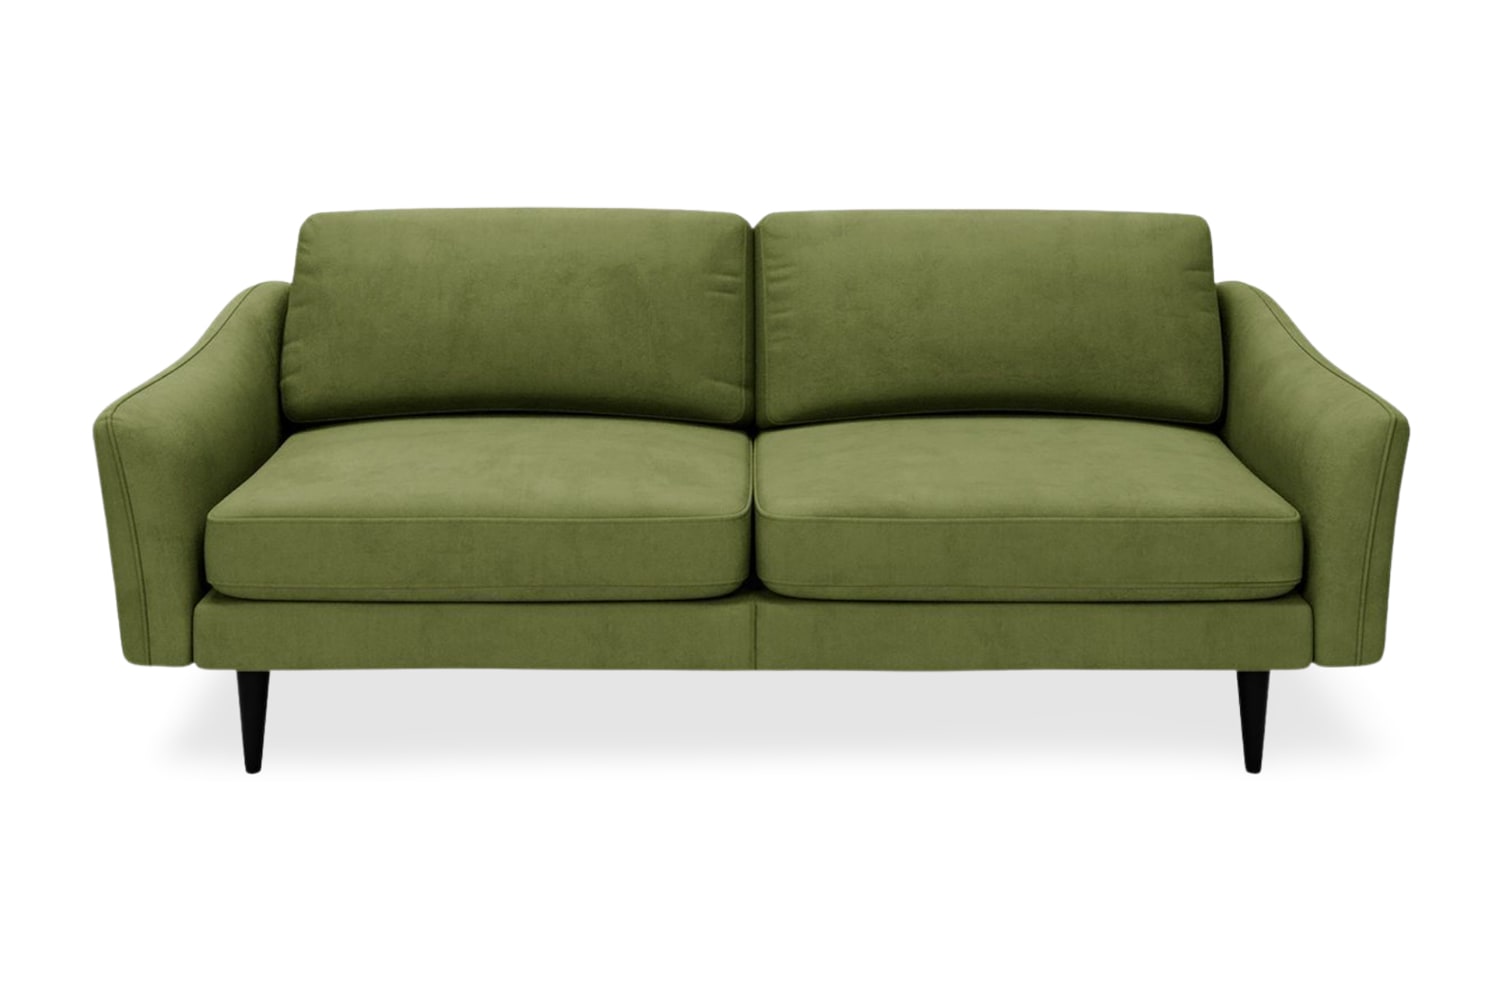 SNUG | The Rebel 3 Seater Sofa in Olive variant_40414890491952